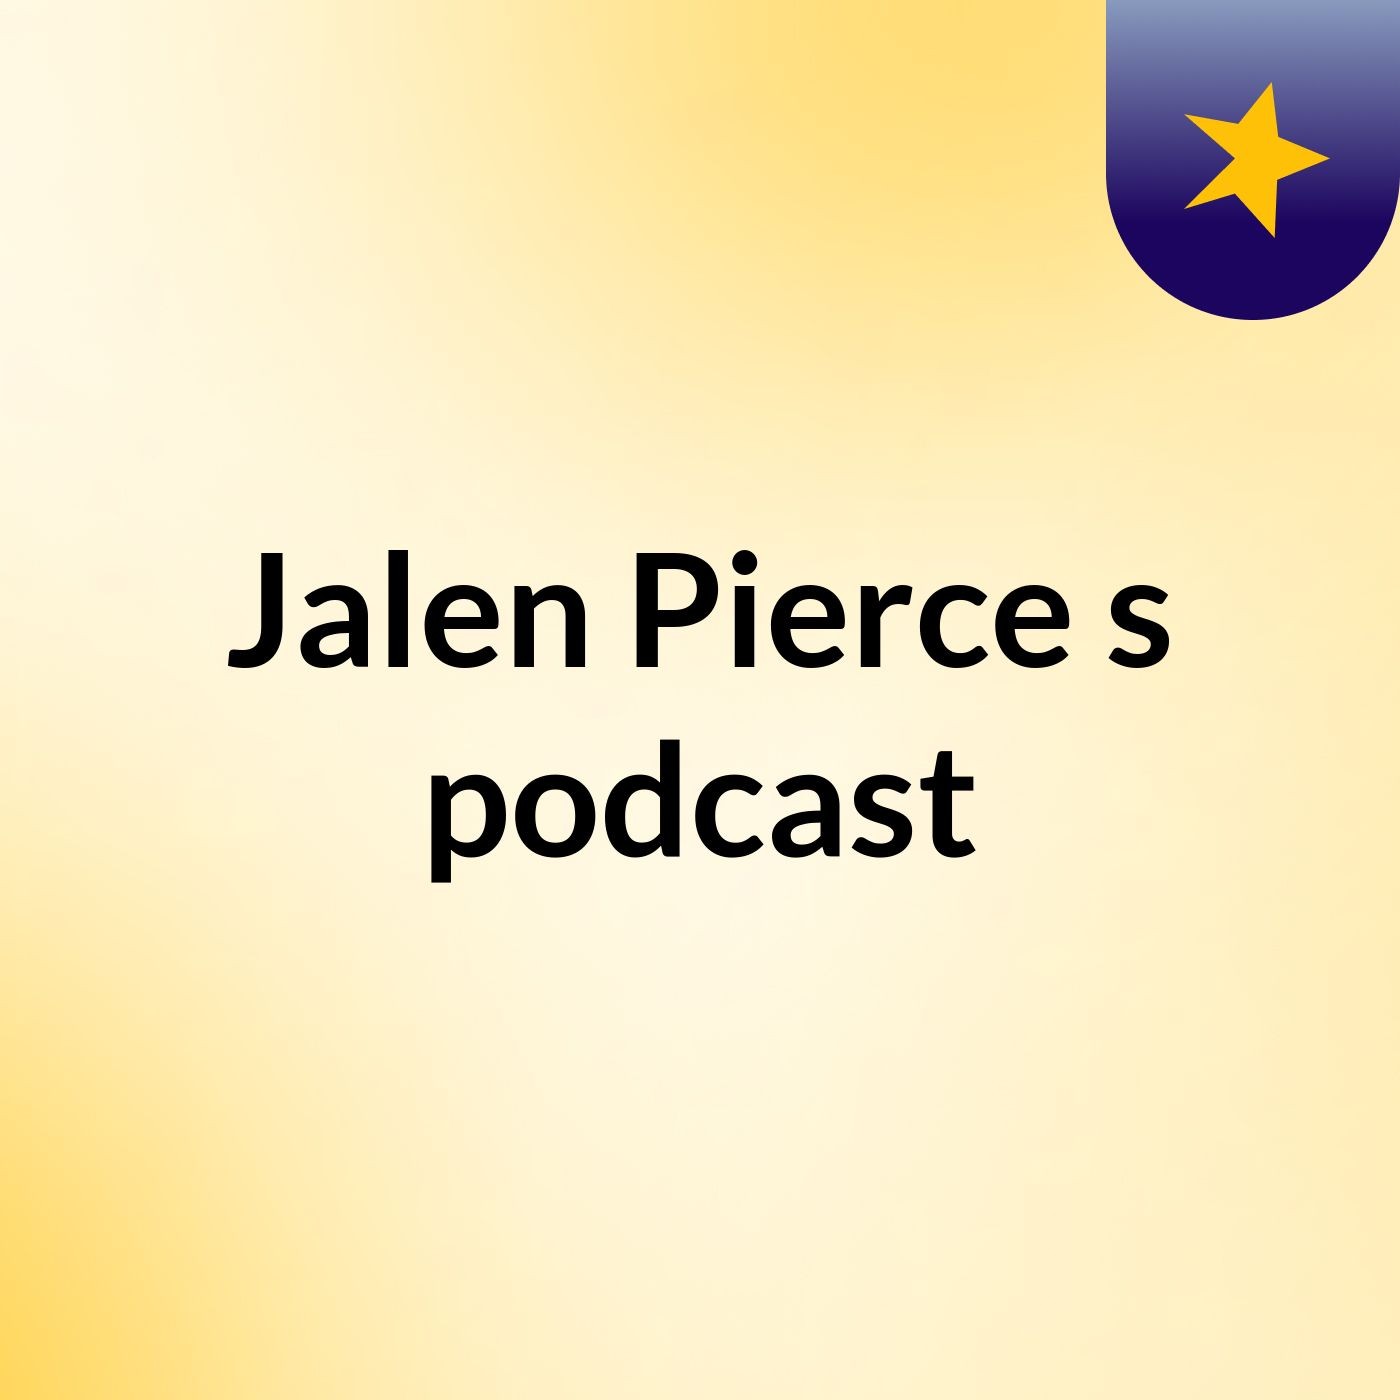 Jalen Pierce's podcast